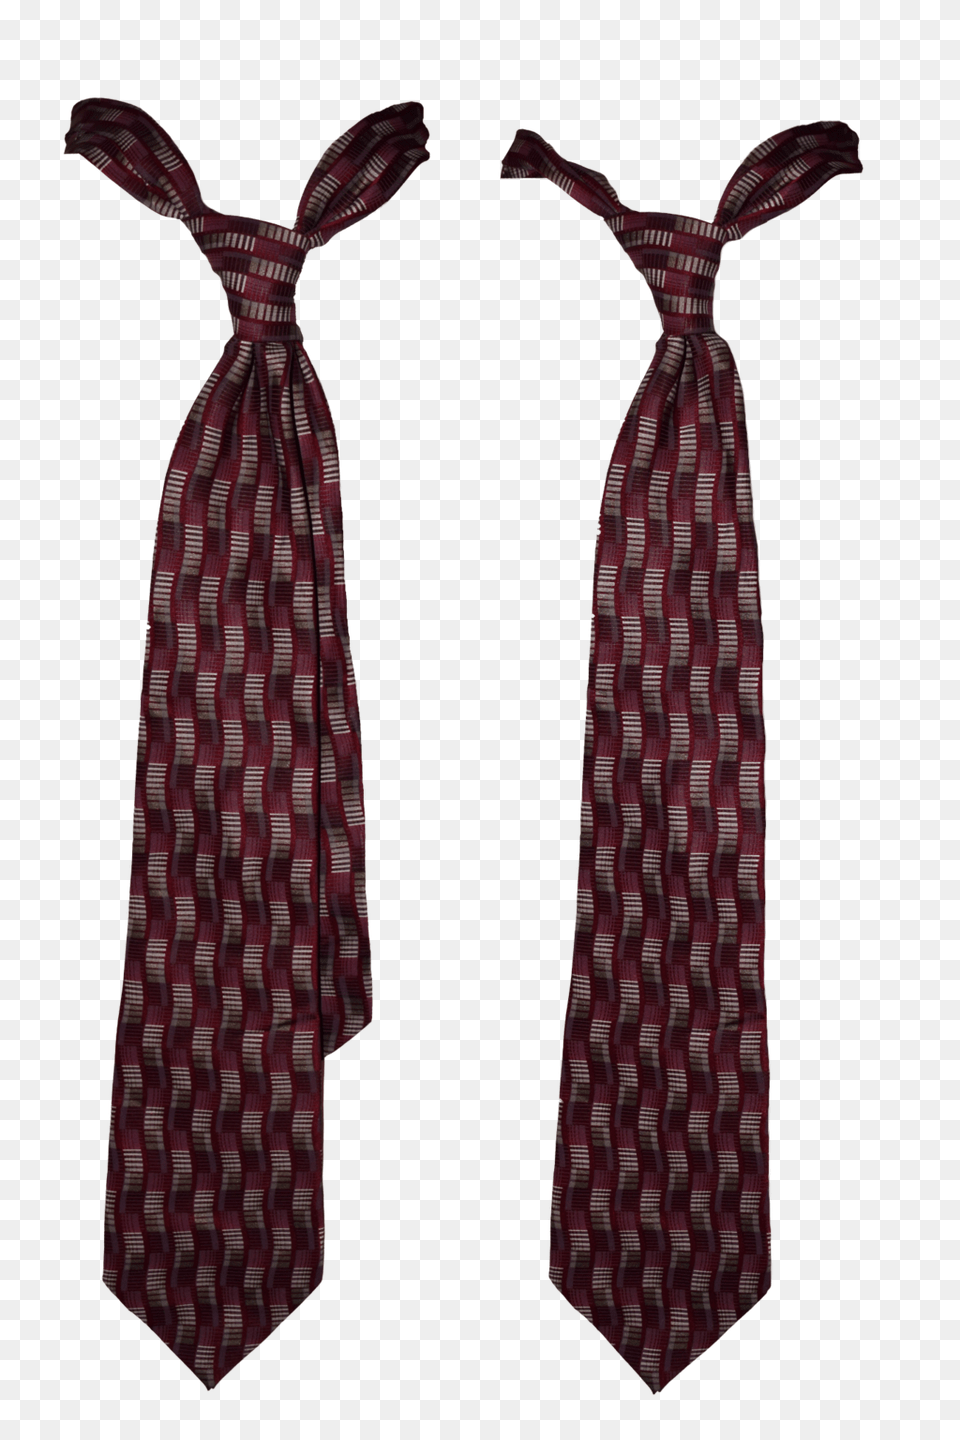 Two Ties, Accessories, Formal Wear, Necktie, Tie Free Png Download